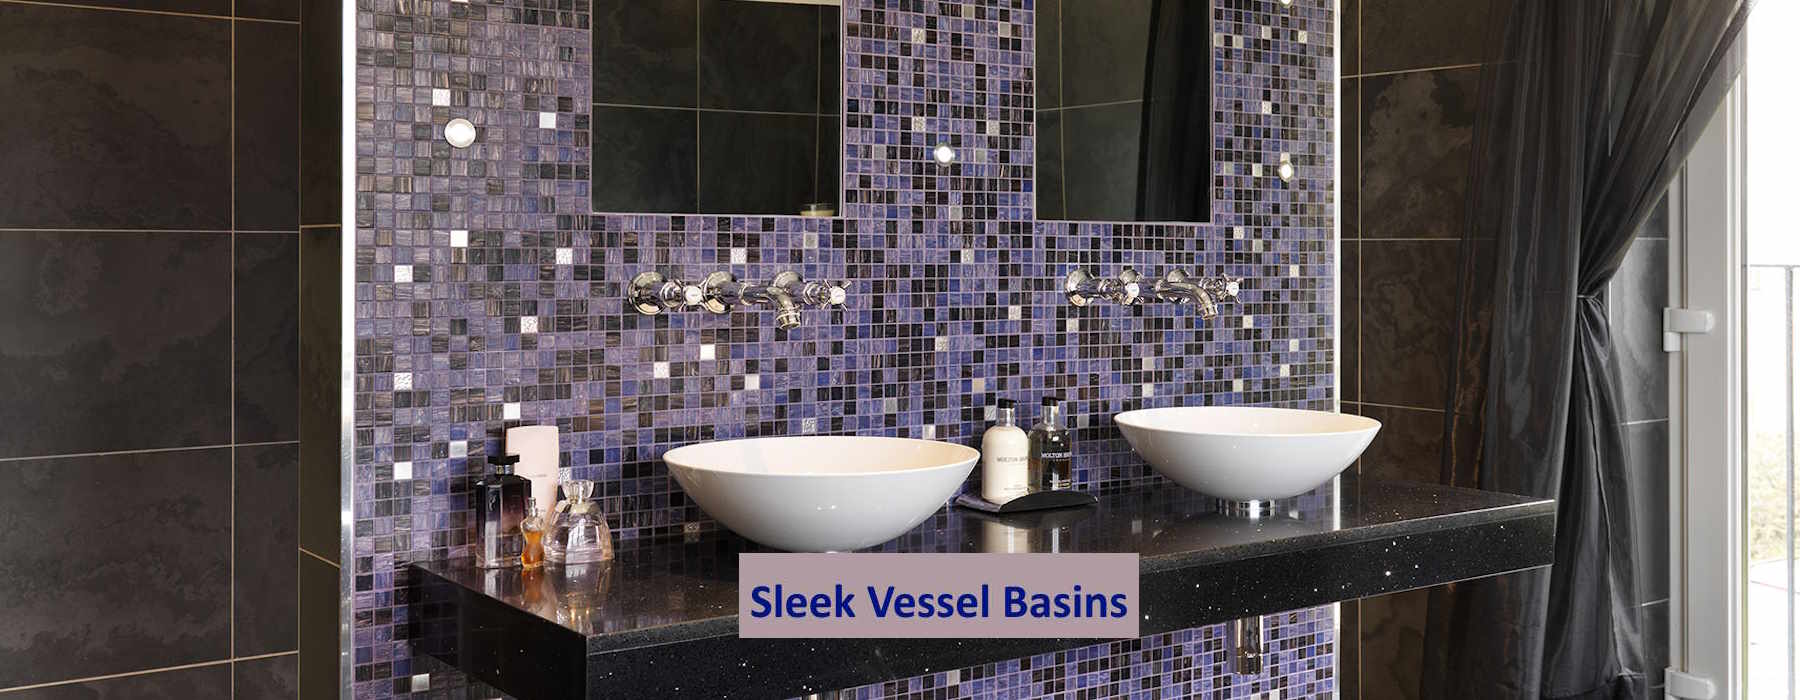 vessel basins